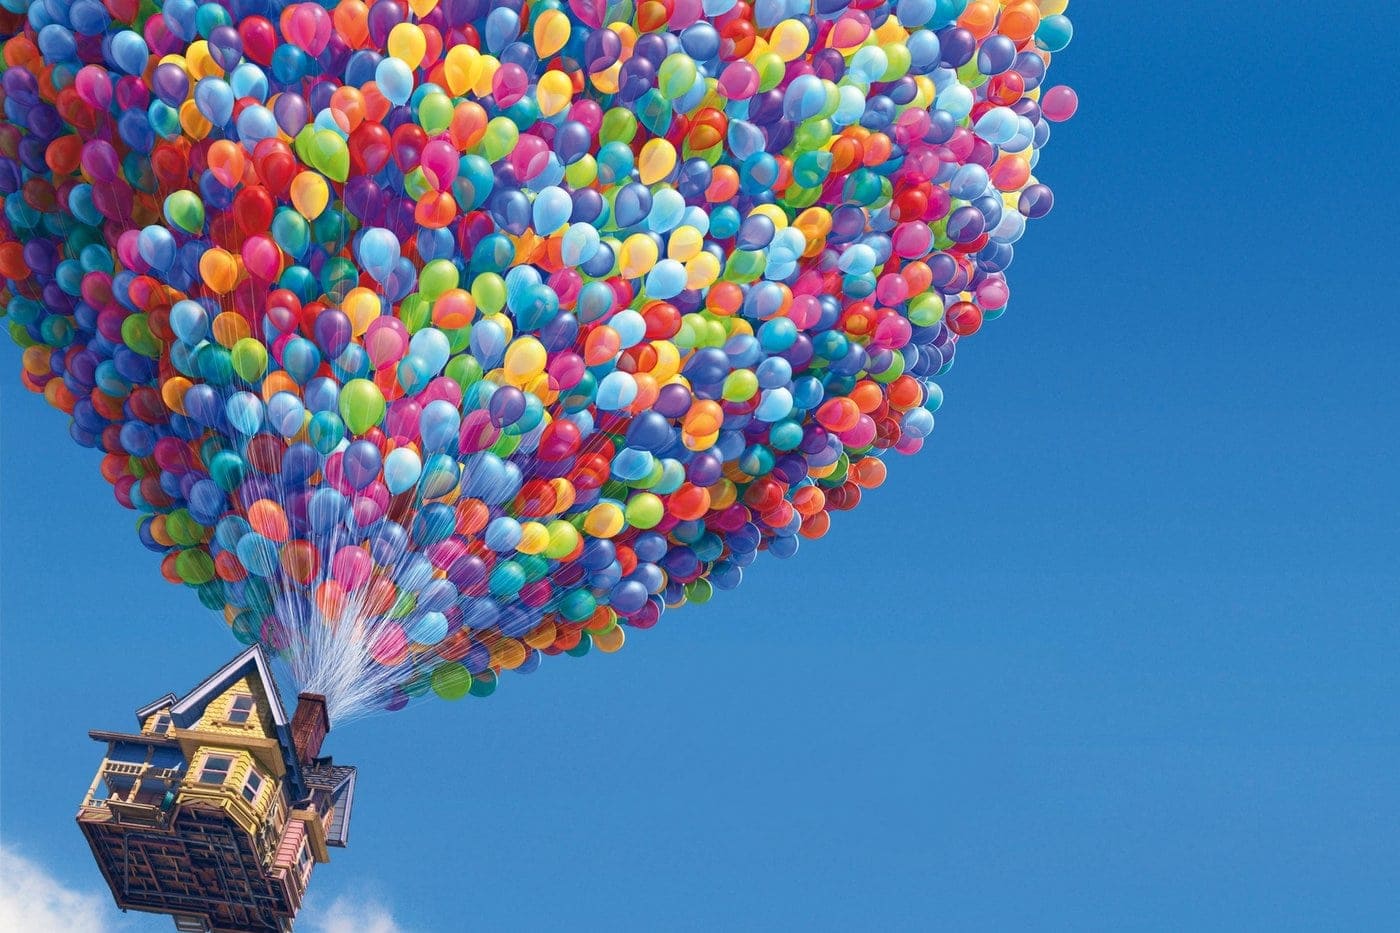 Pixar's UP movie balloons sky house